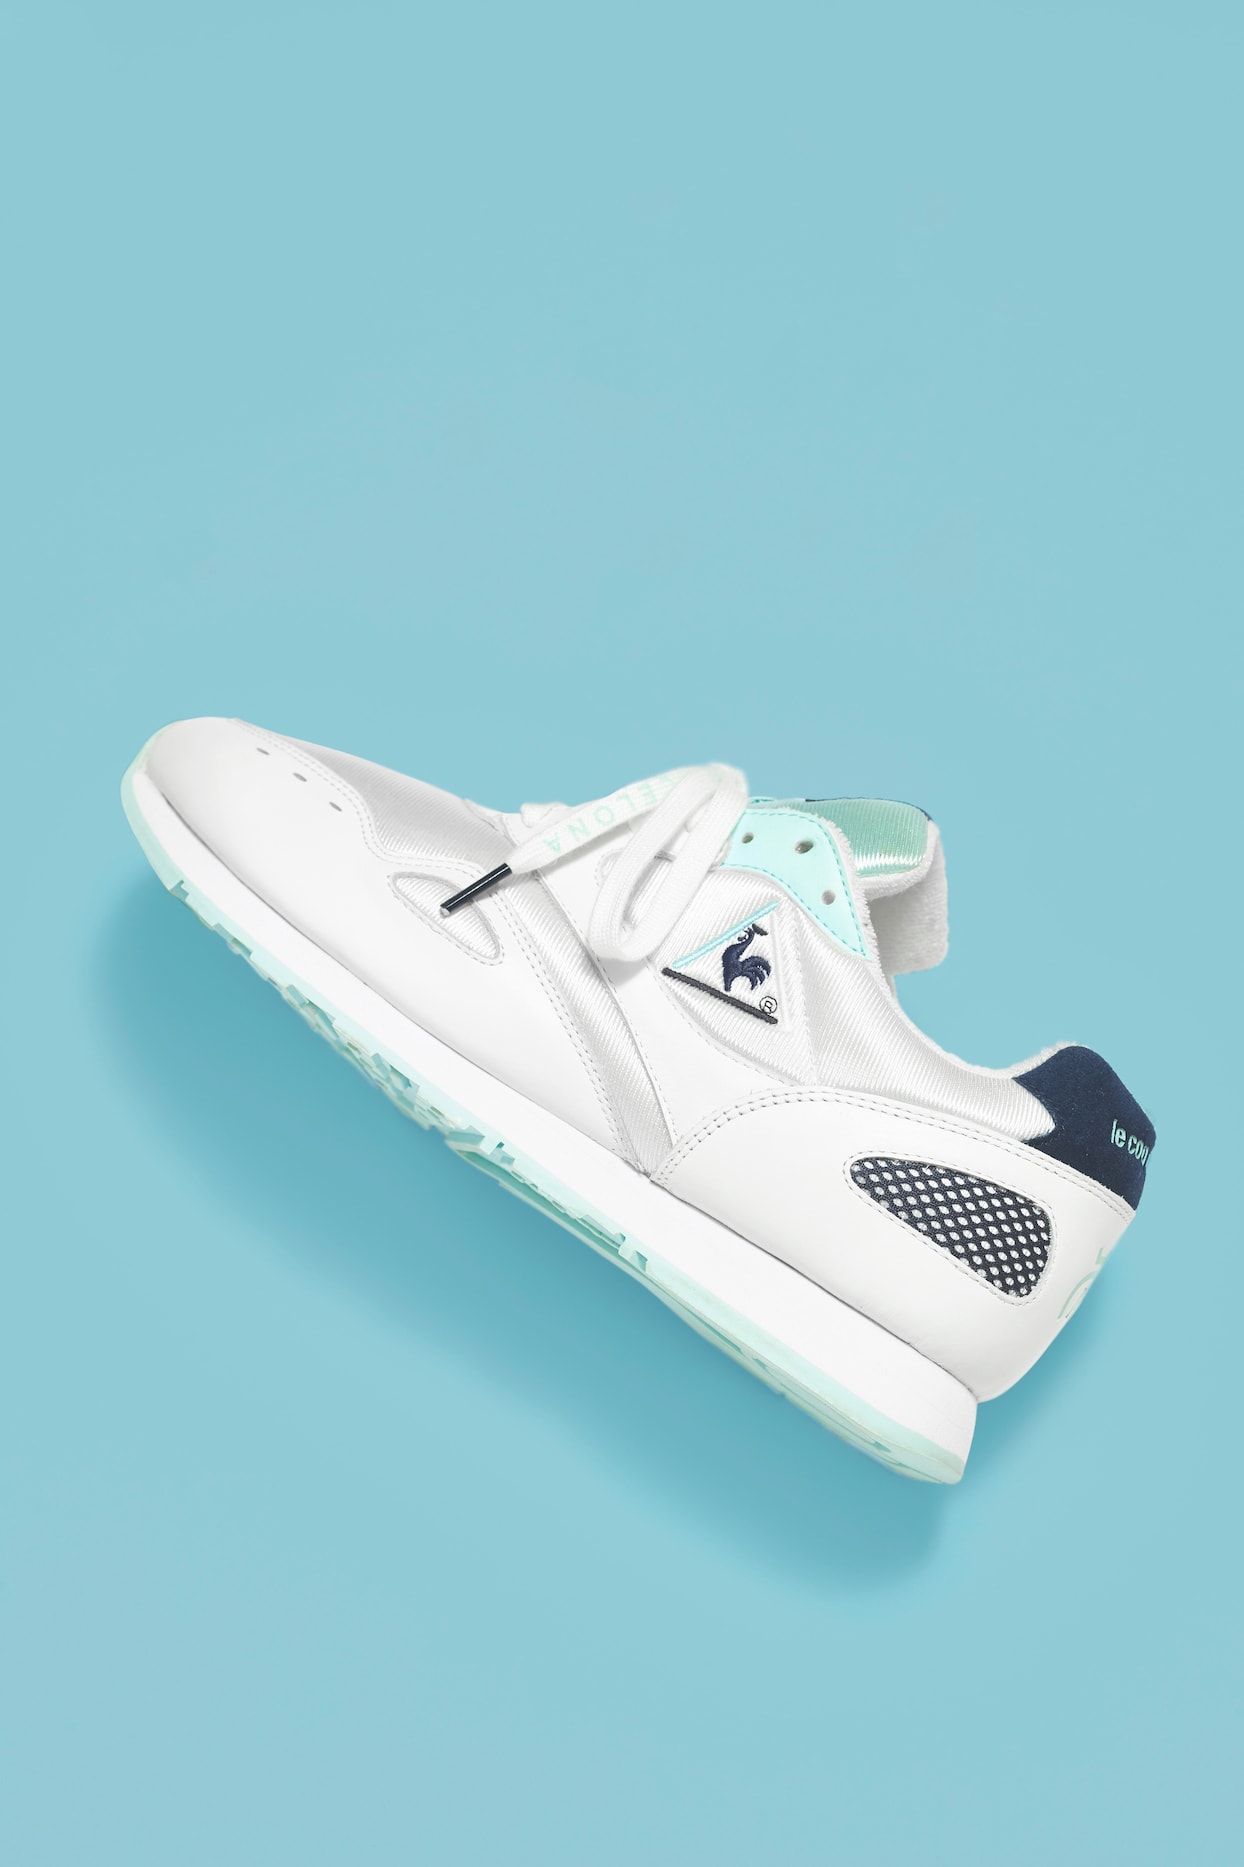 24 Kilates Le Coq Sportif Flash Collaboration capsule collection white april 7 2018 release date info drop sneakers shoes footwear